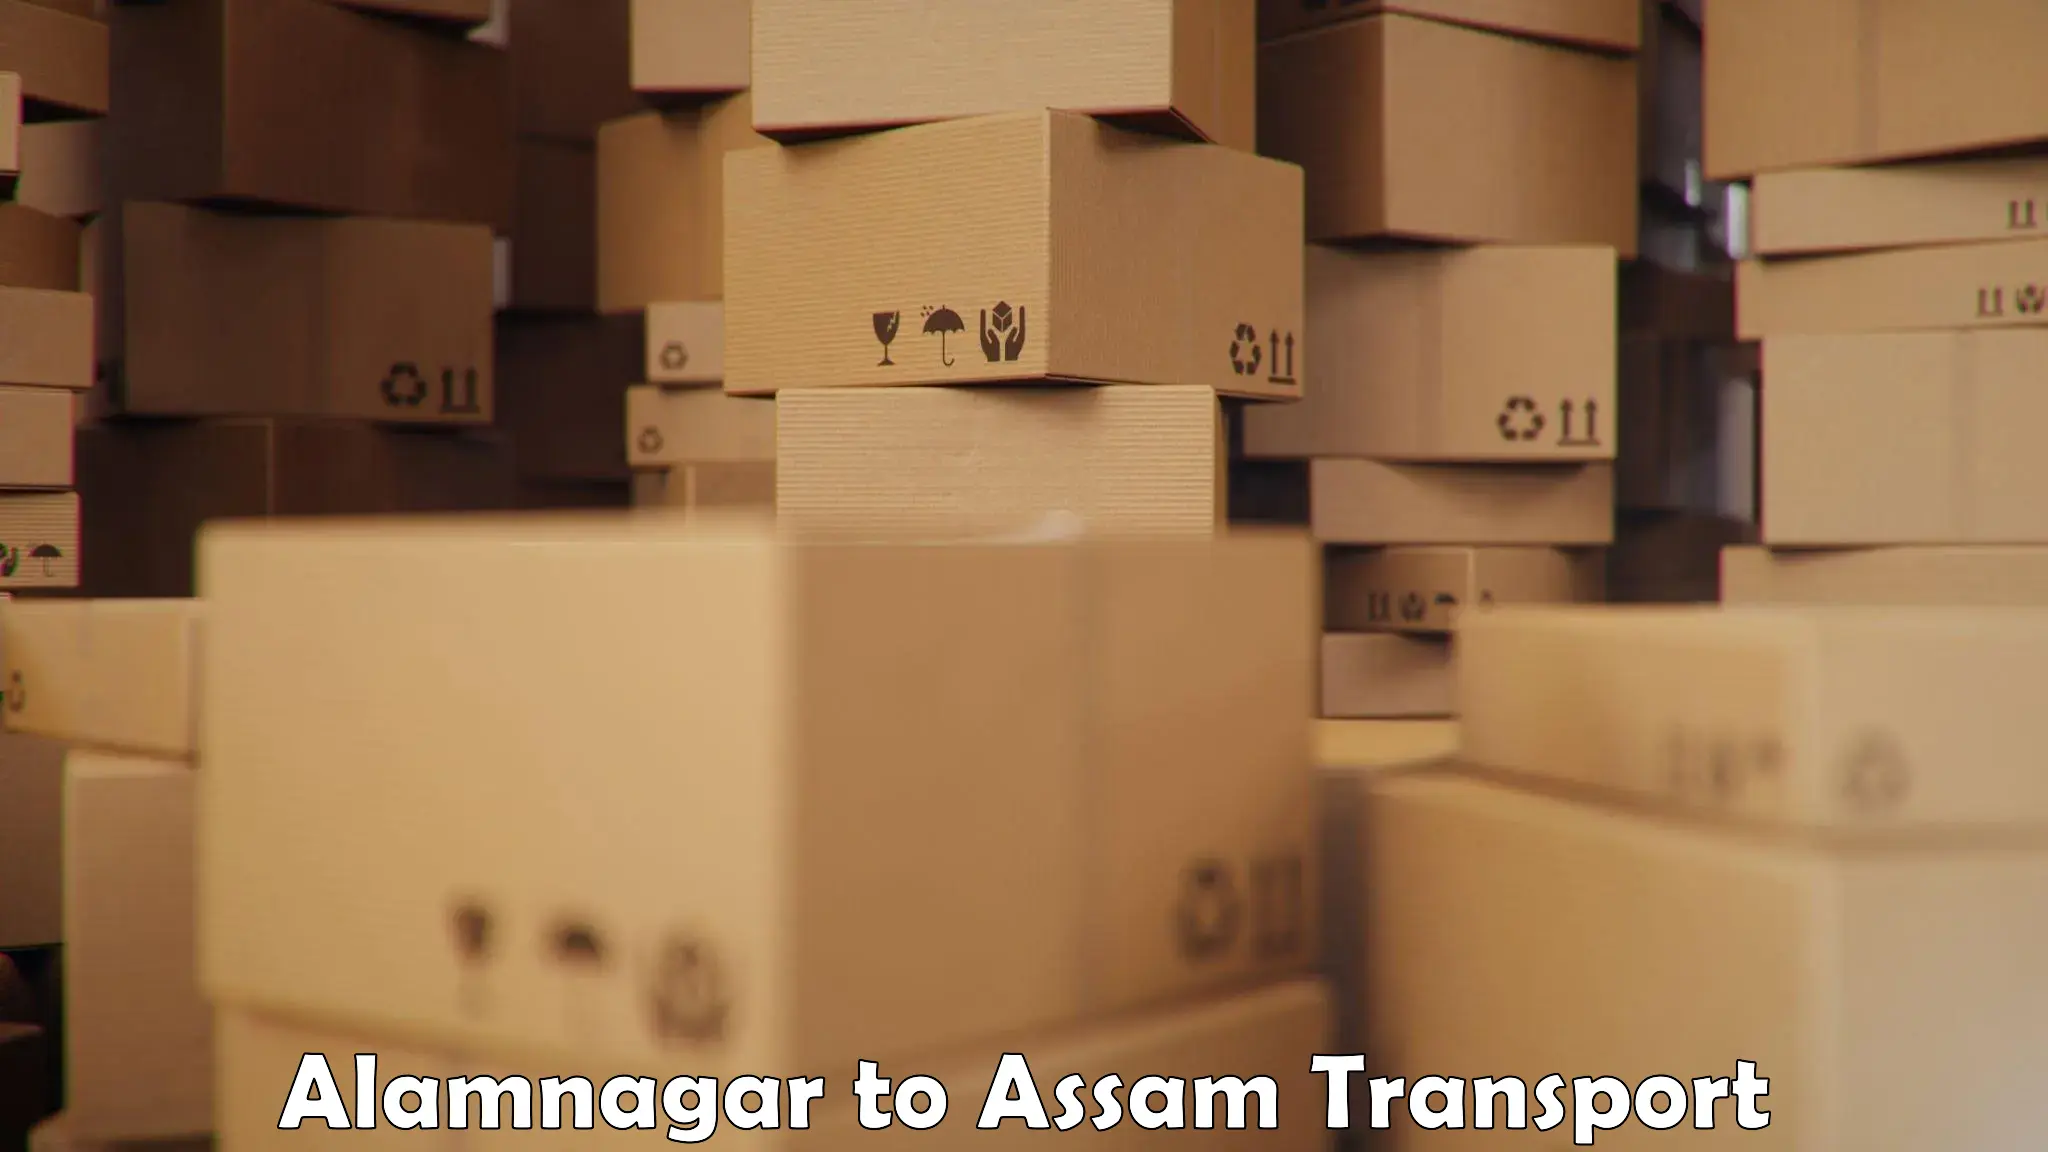 Shipping partner Alamnagar to Jorabat